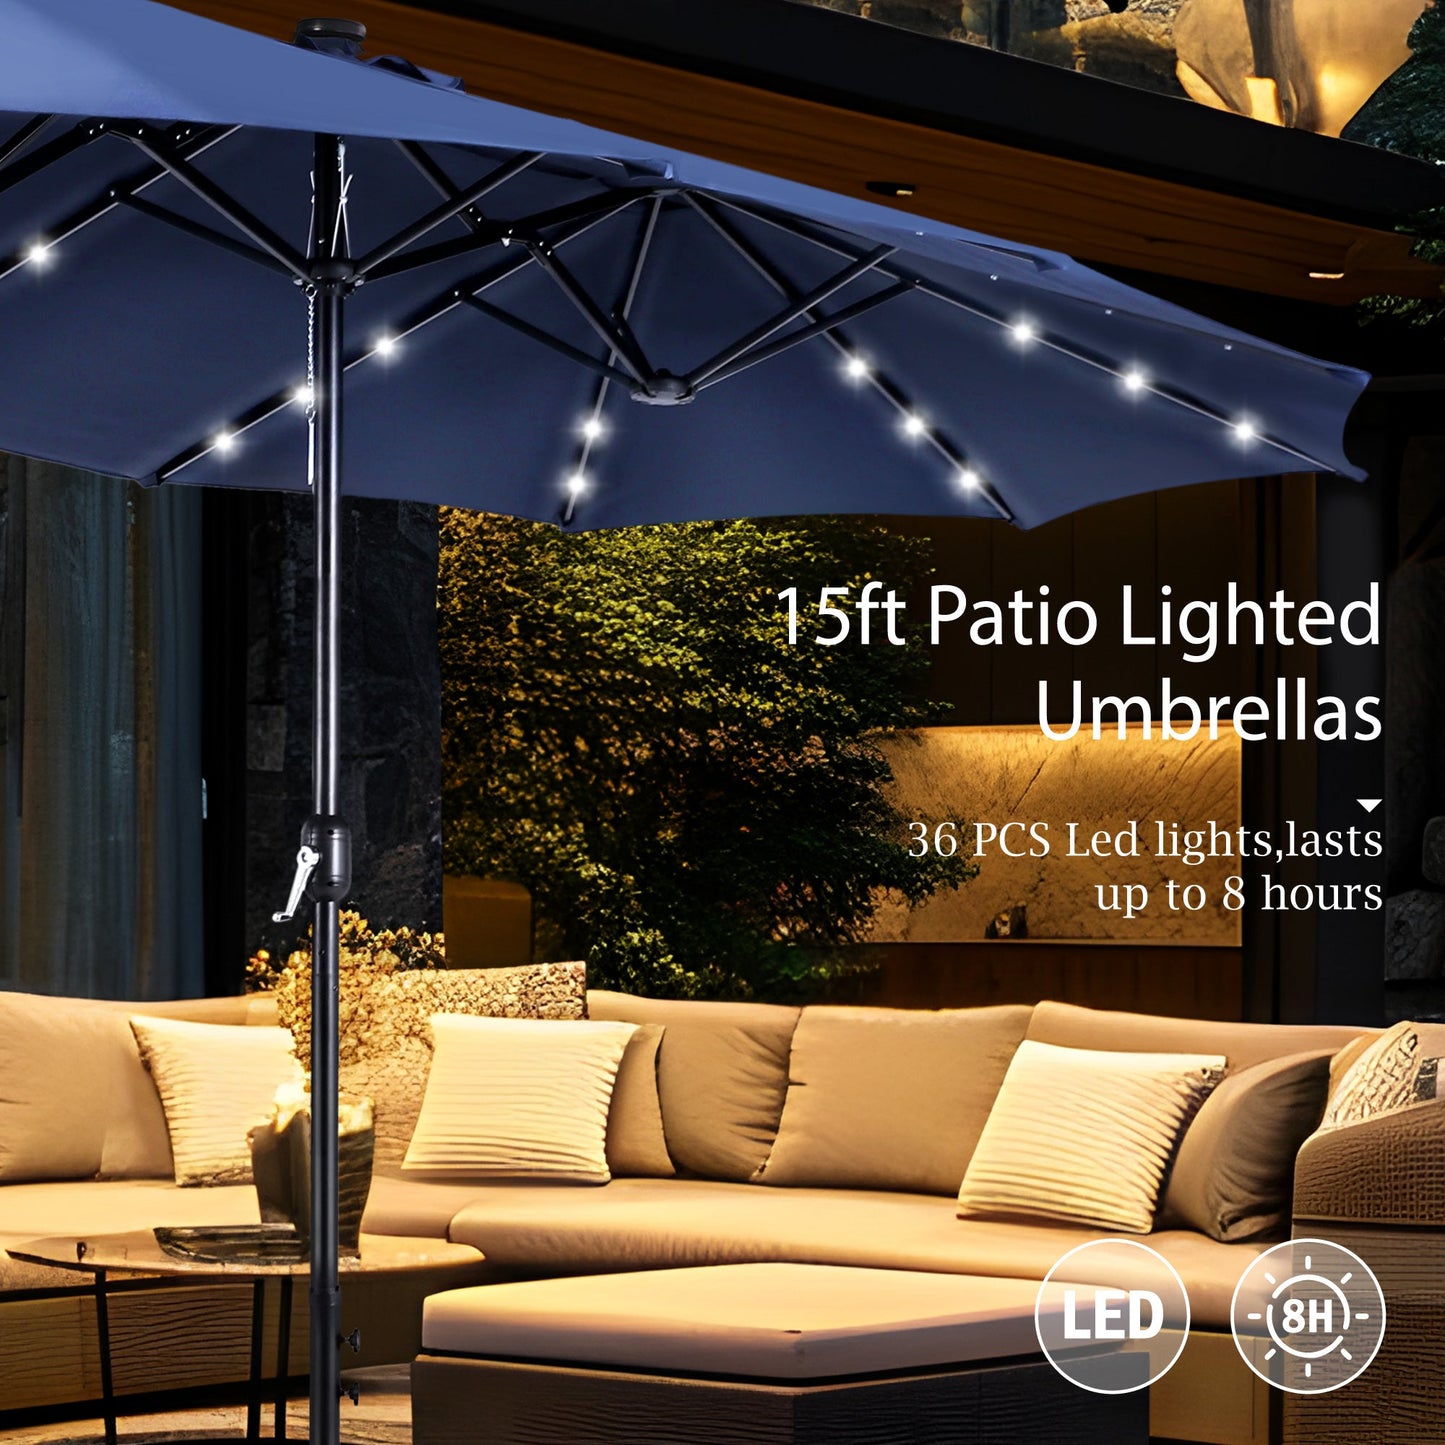 Alpha Joy 15ft Extra Large Outdoor Patio Double-Sided Umbrella with Solar Lights & Umbrella Base, Navy Blue